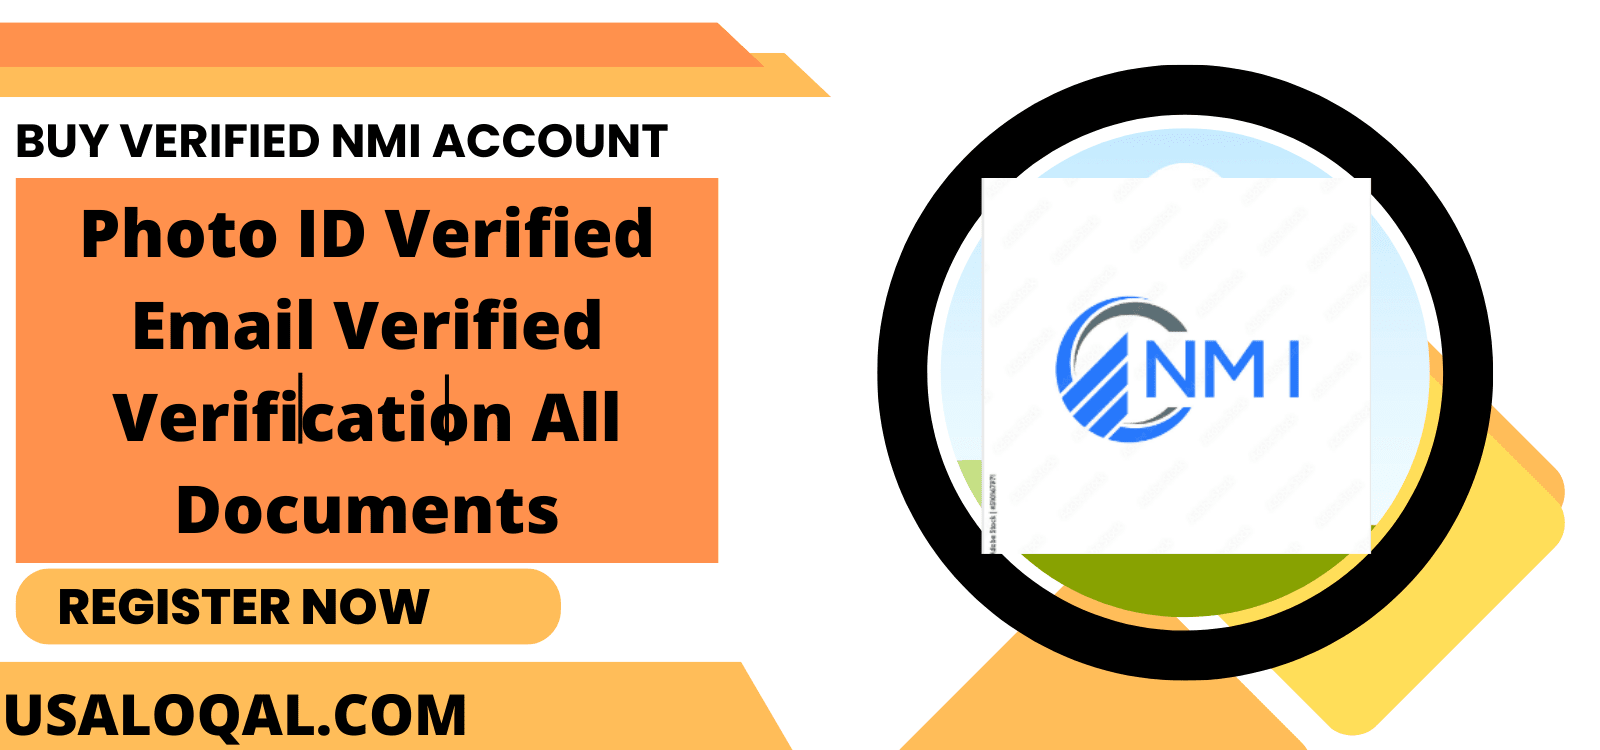 Buy Verified NMI Account - Usaloqal